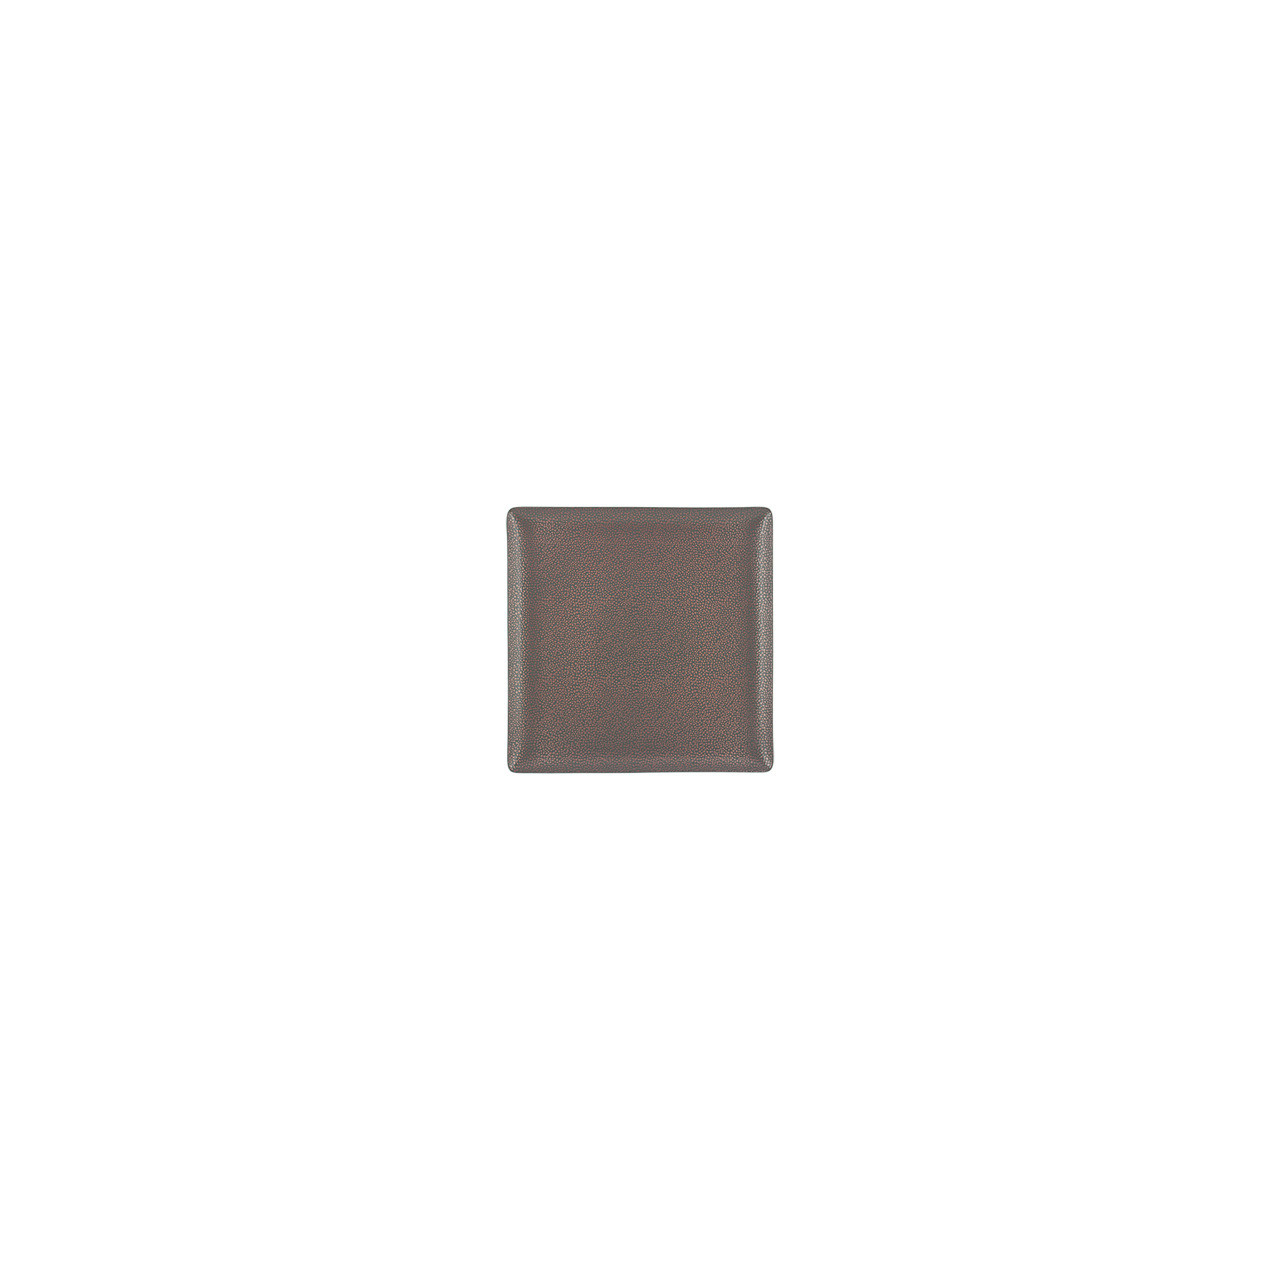 Pearls, Coupteller flach quadratisch 88 x 88 mm metallic copper